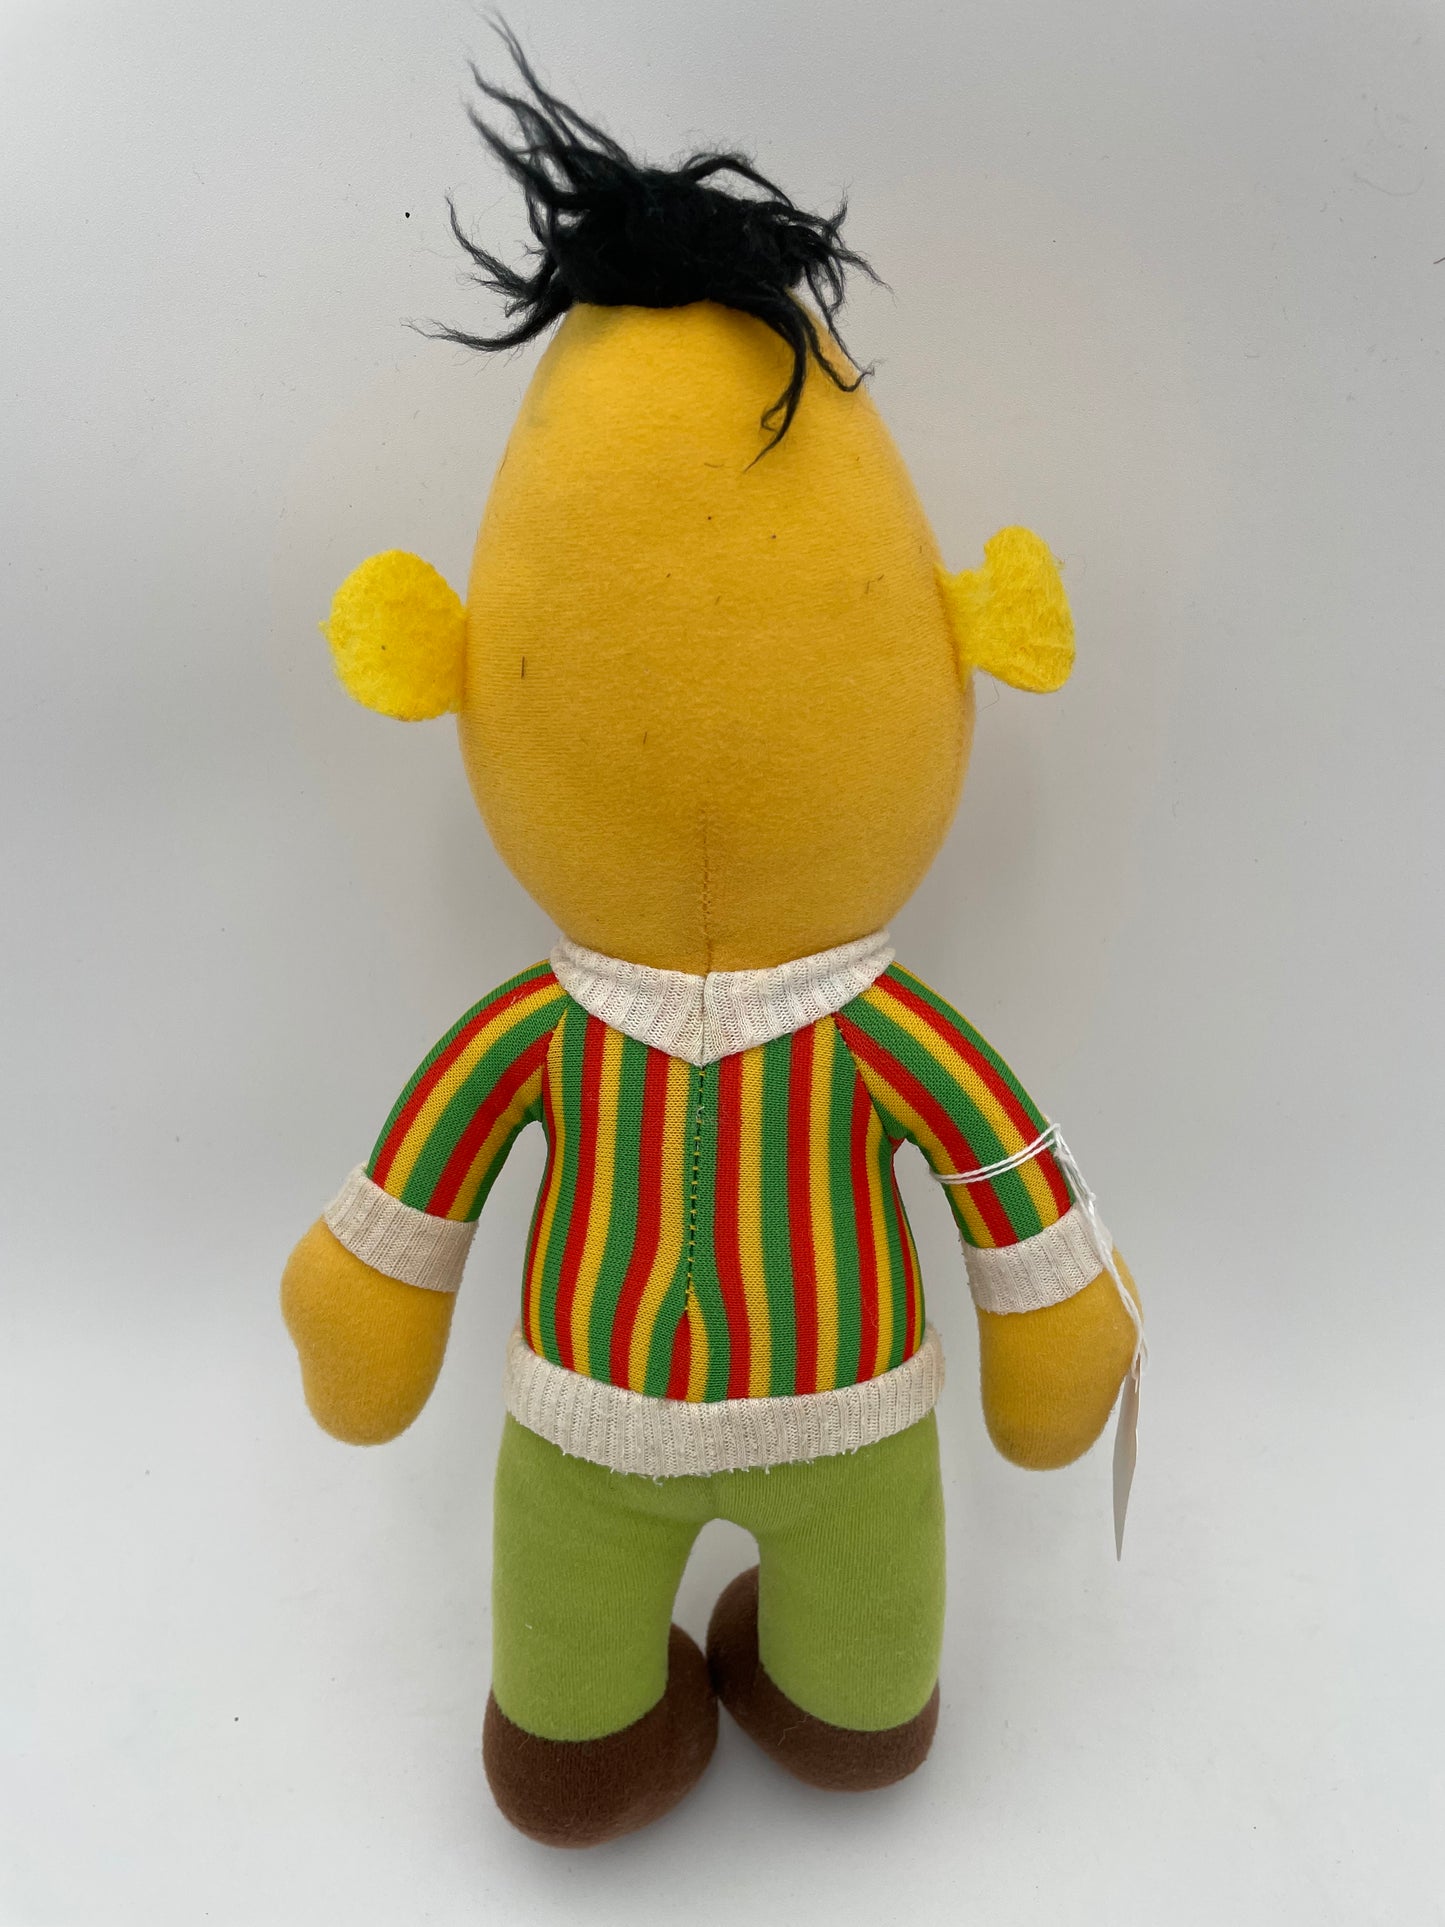 Sesame Street Bert Plush #100467